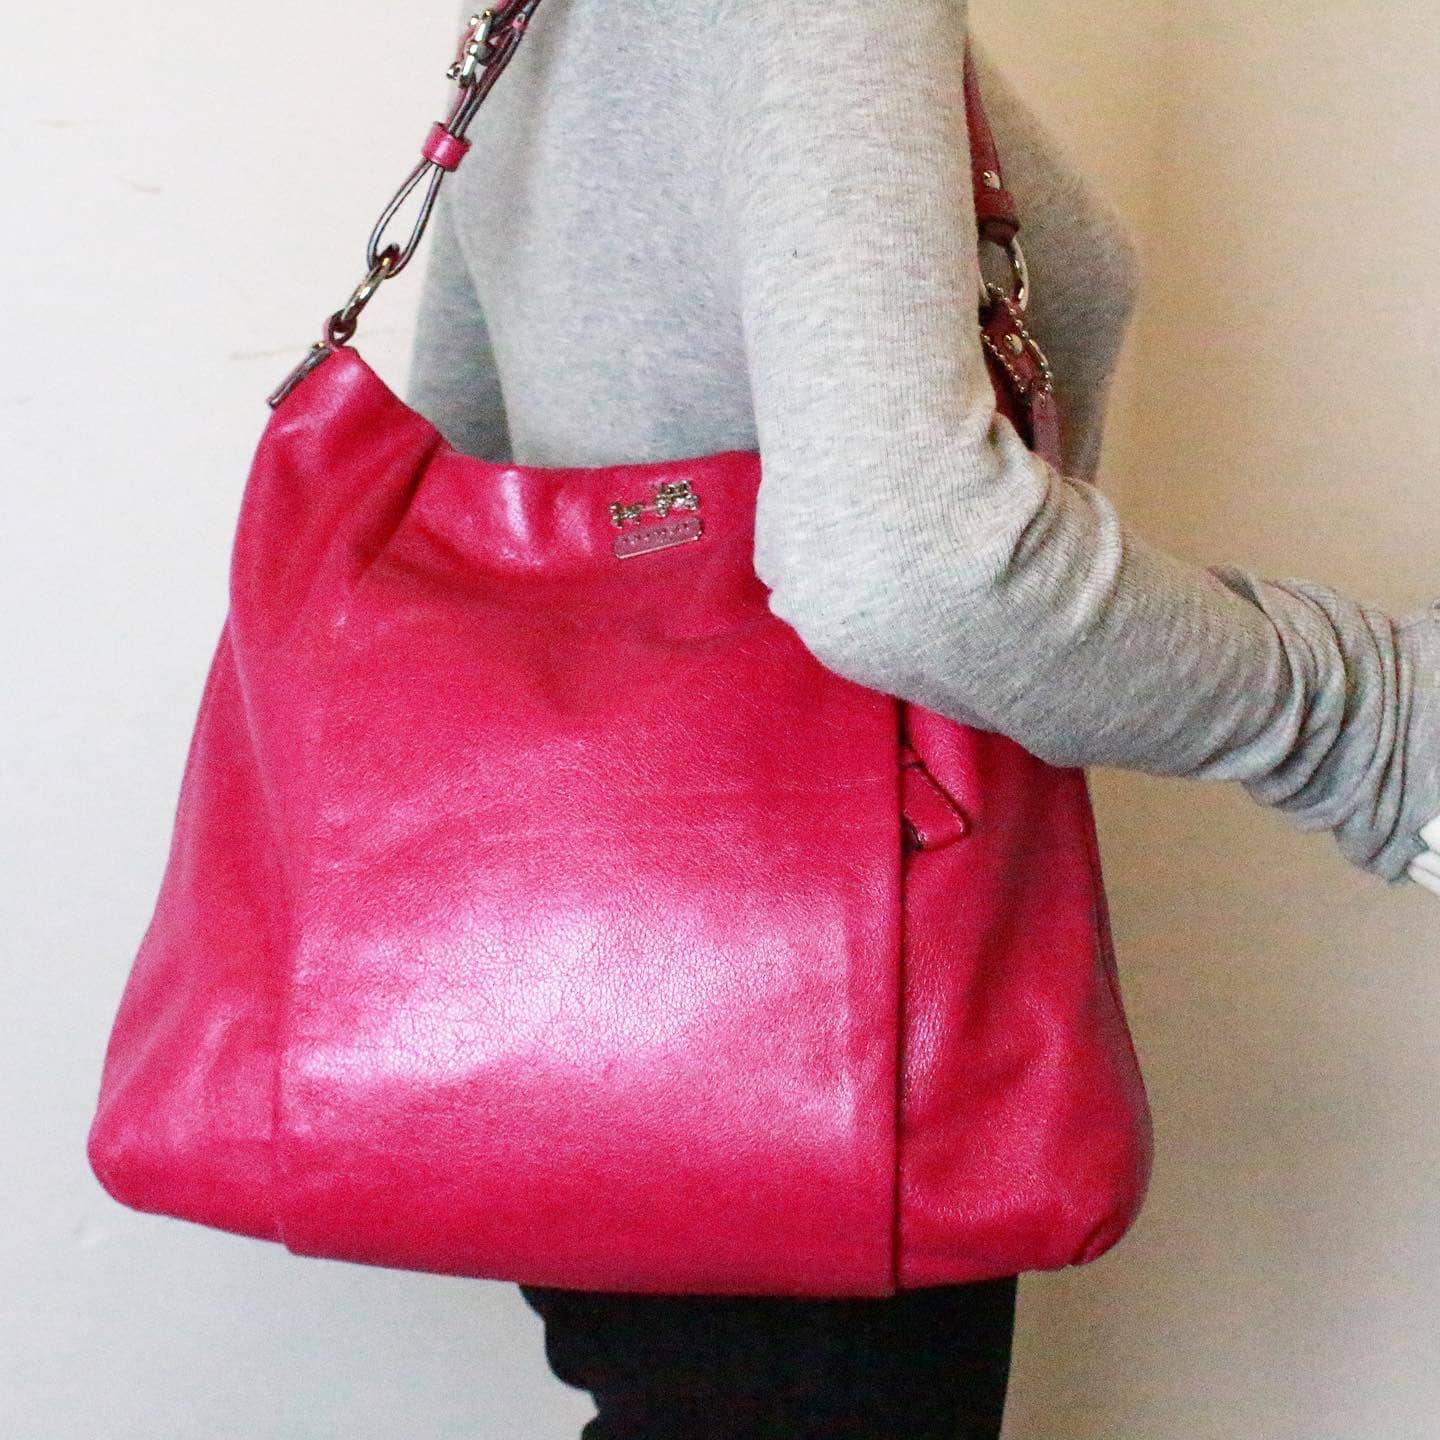 Coach Hot Pink Leather Handbag item 40481 8